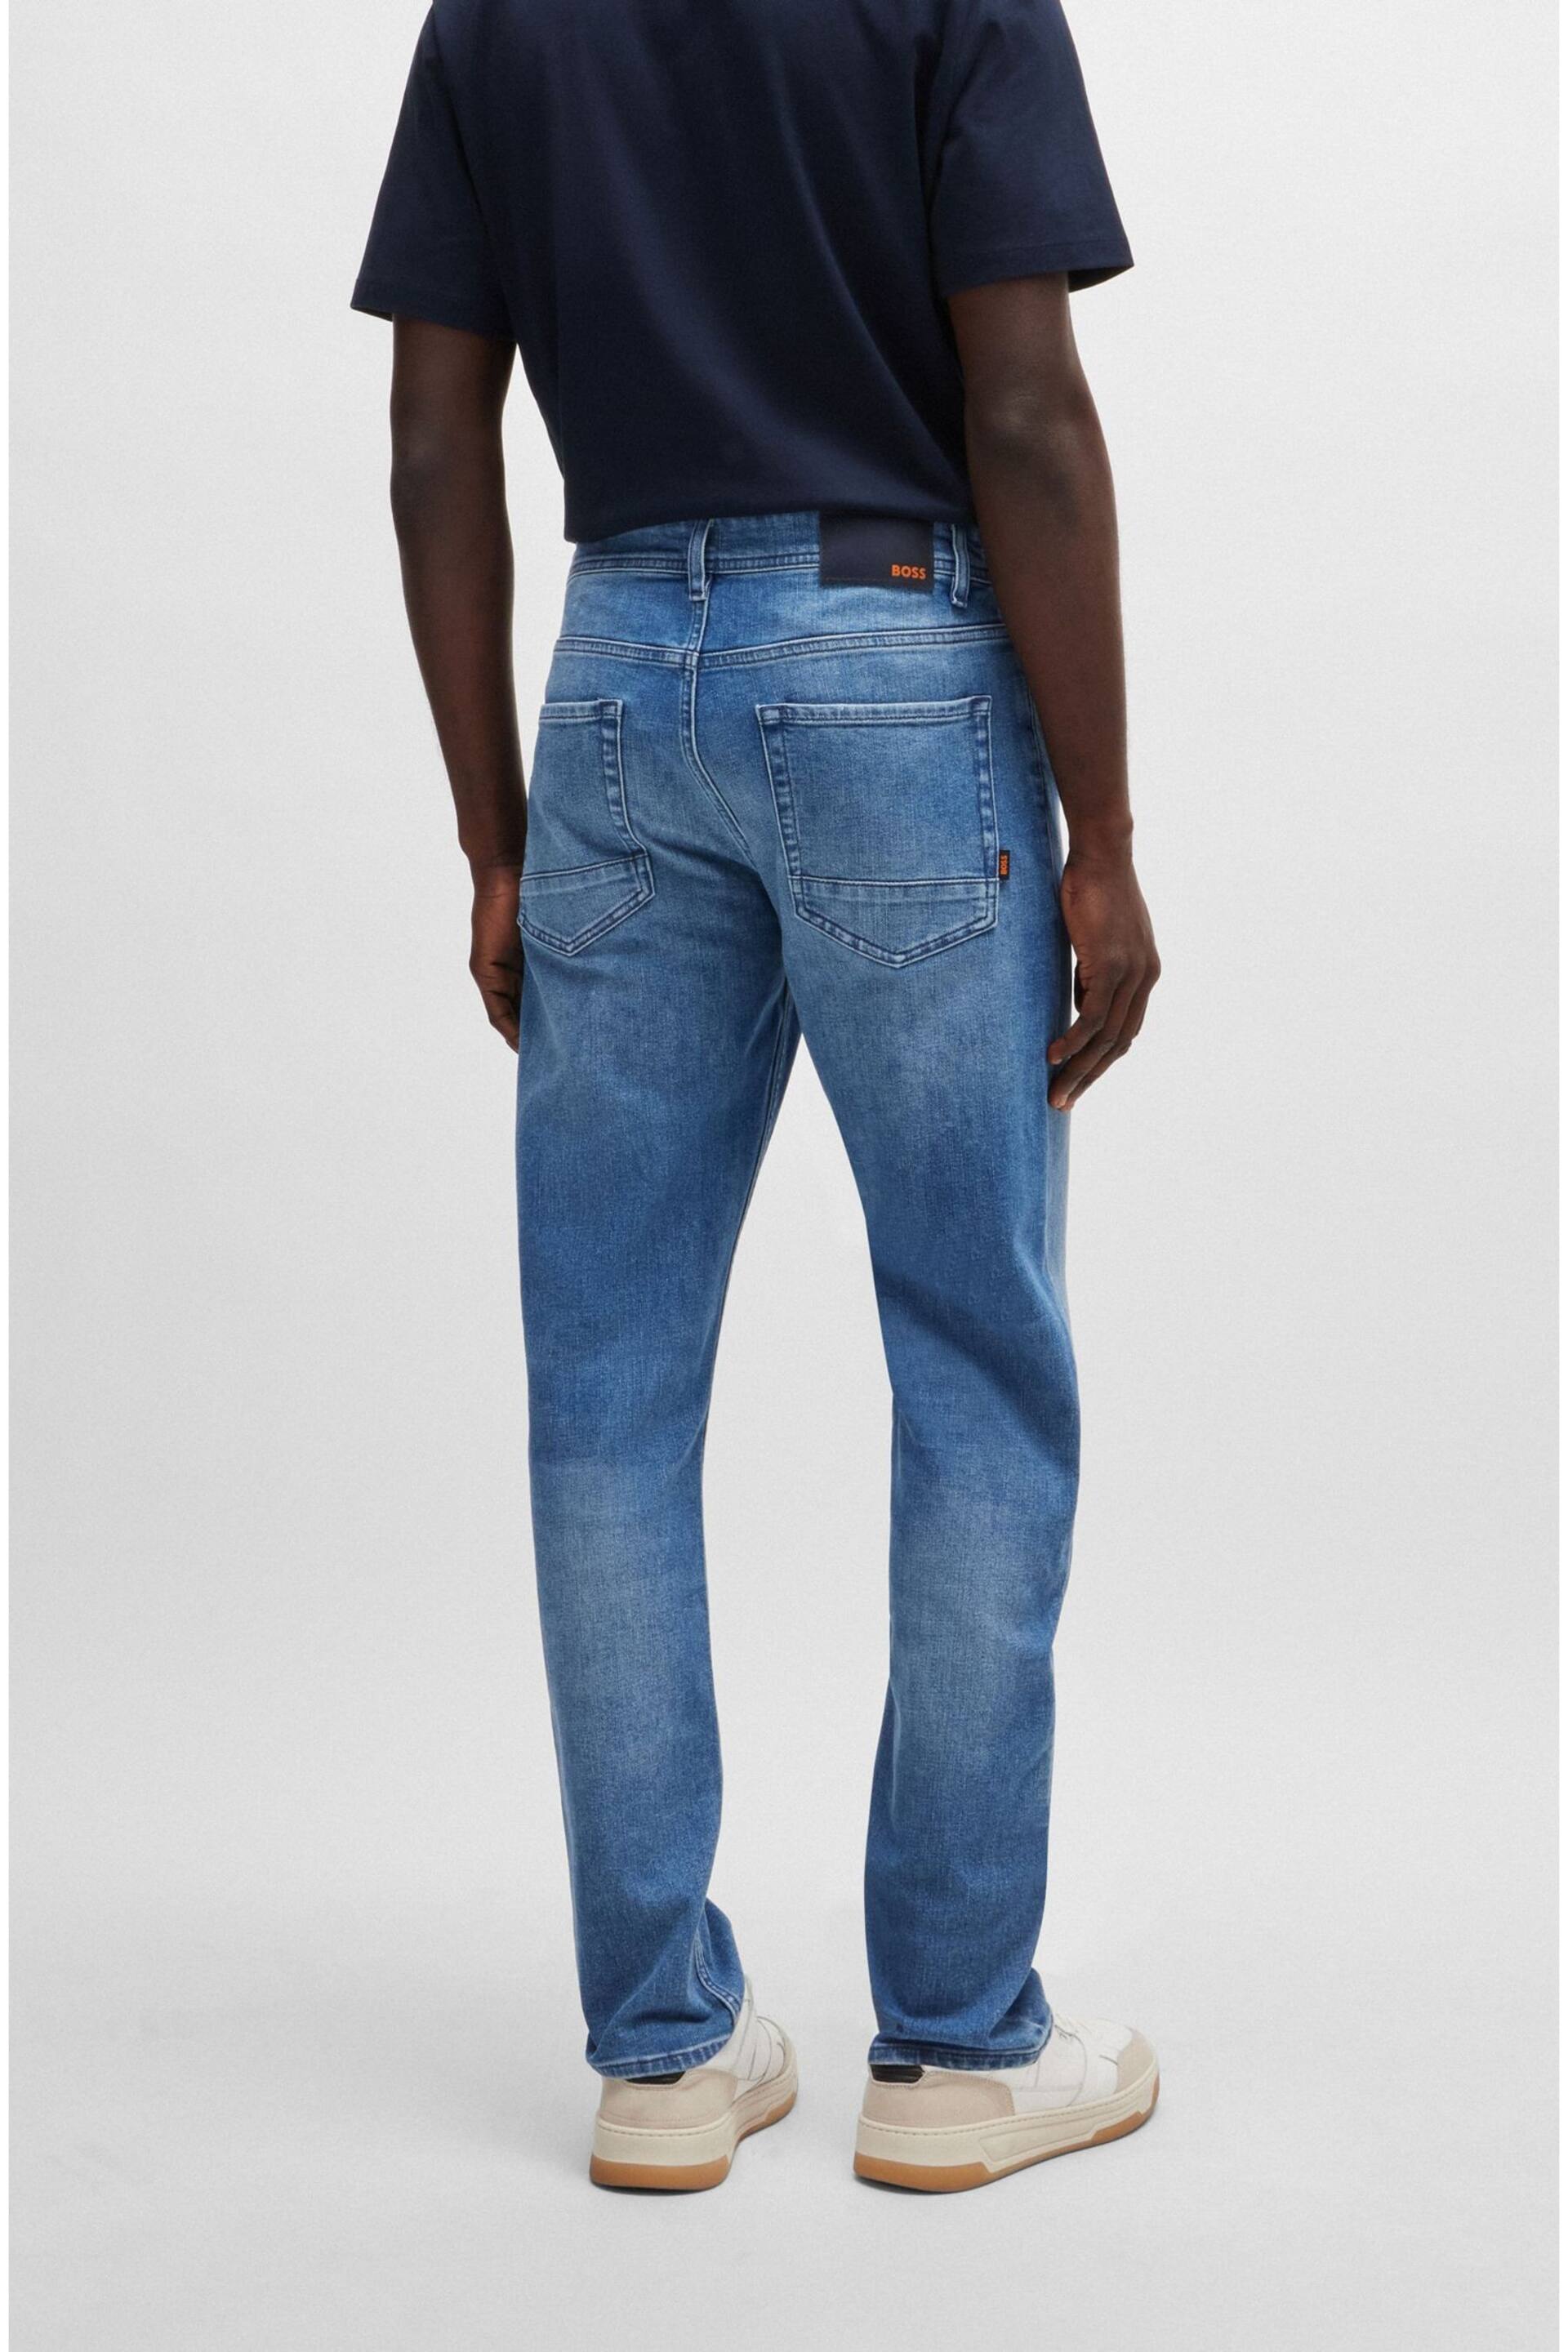 BOSS Light Blue Regular Fit Taper Comfort Stretch Denim Jeans - Image 2 of 5